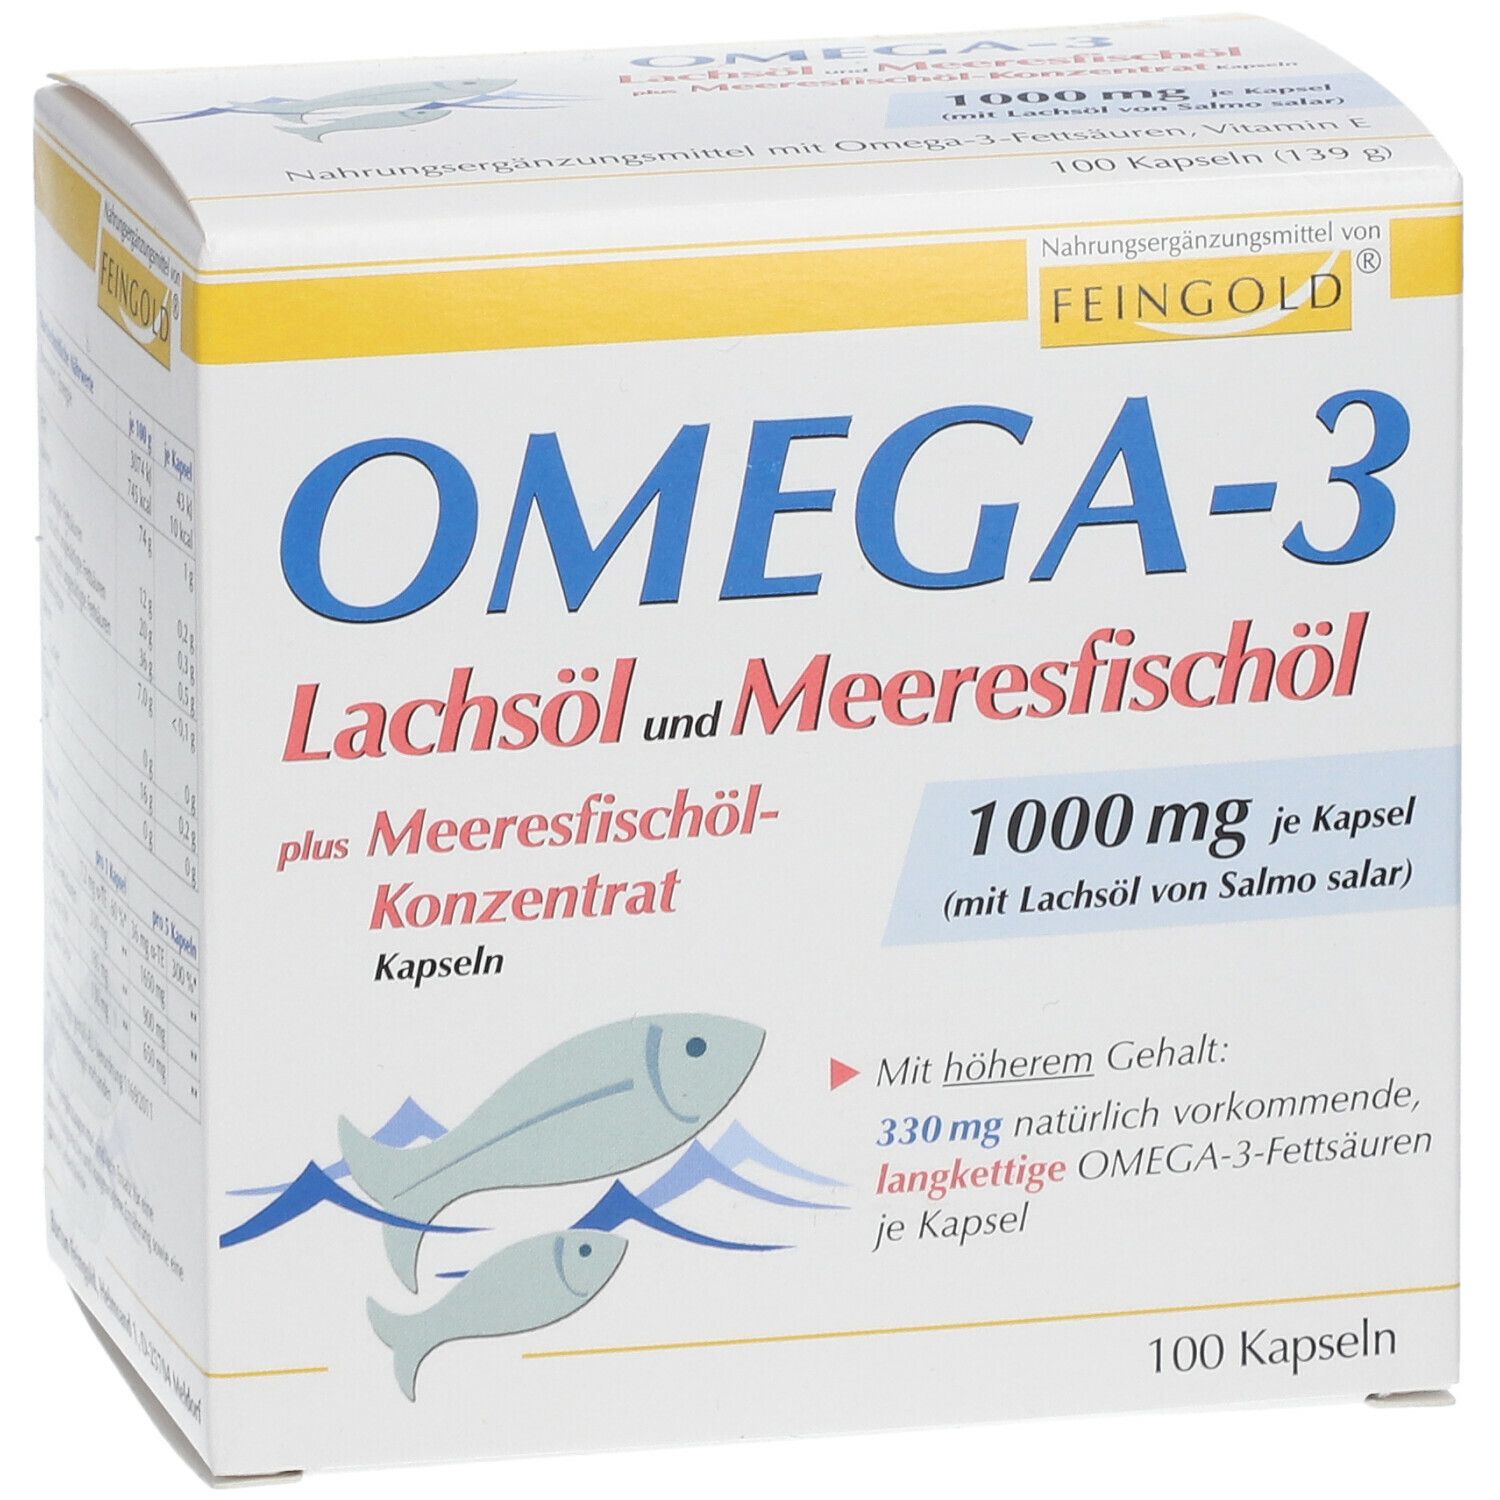 Omega-3 Lachsöl und Meeresfischöl Kapseln